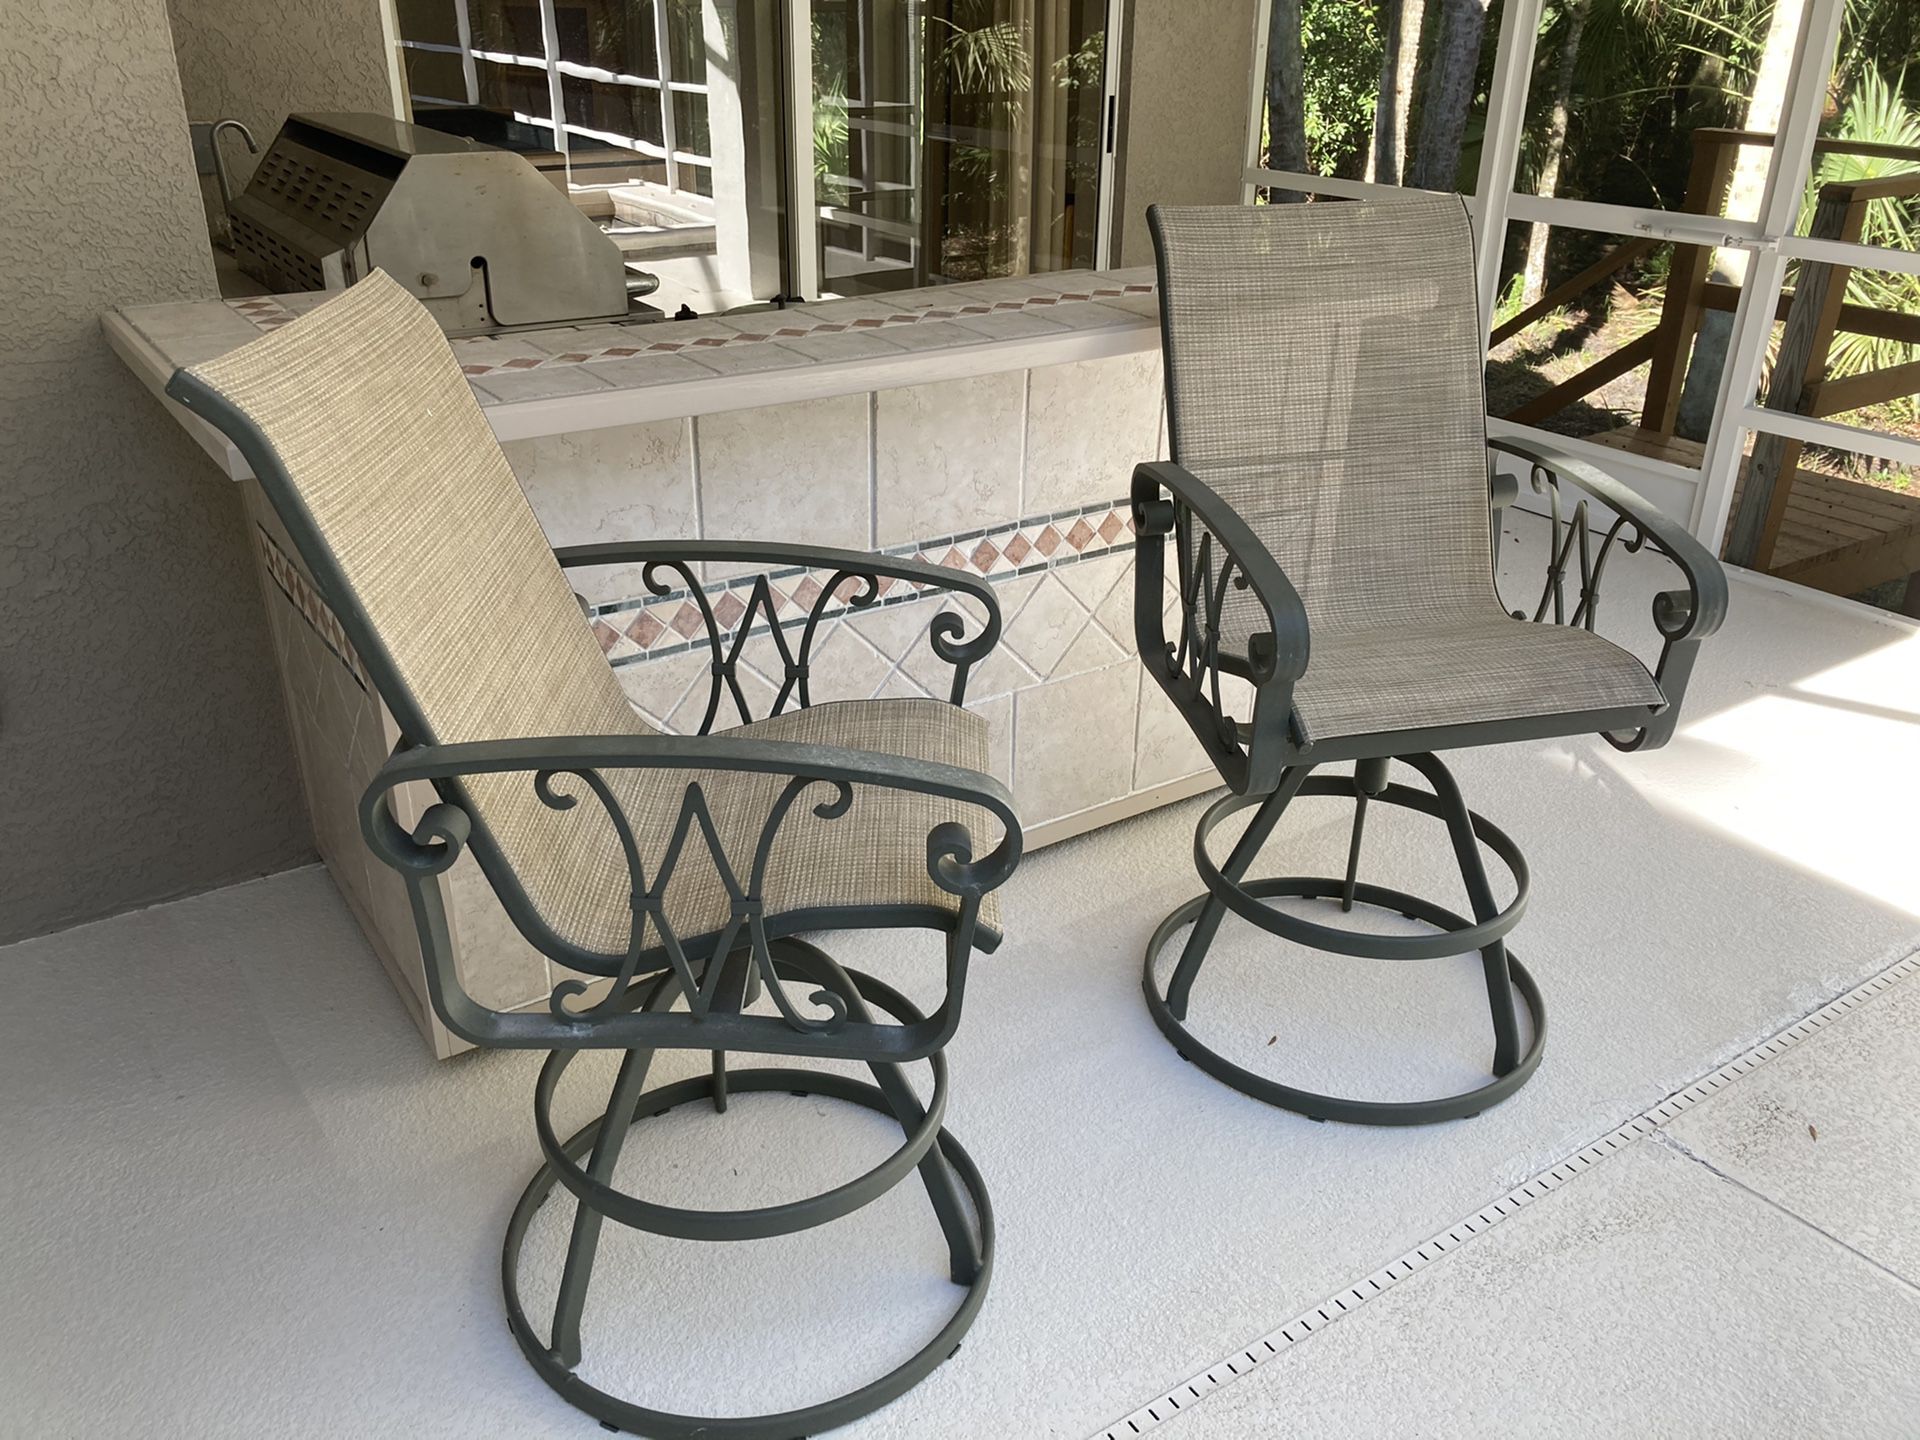 2 Outdoor Patio Bar height stools